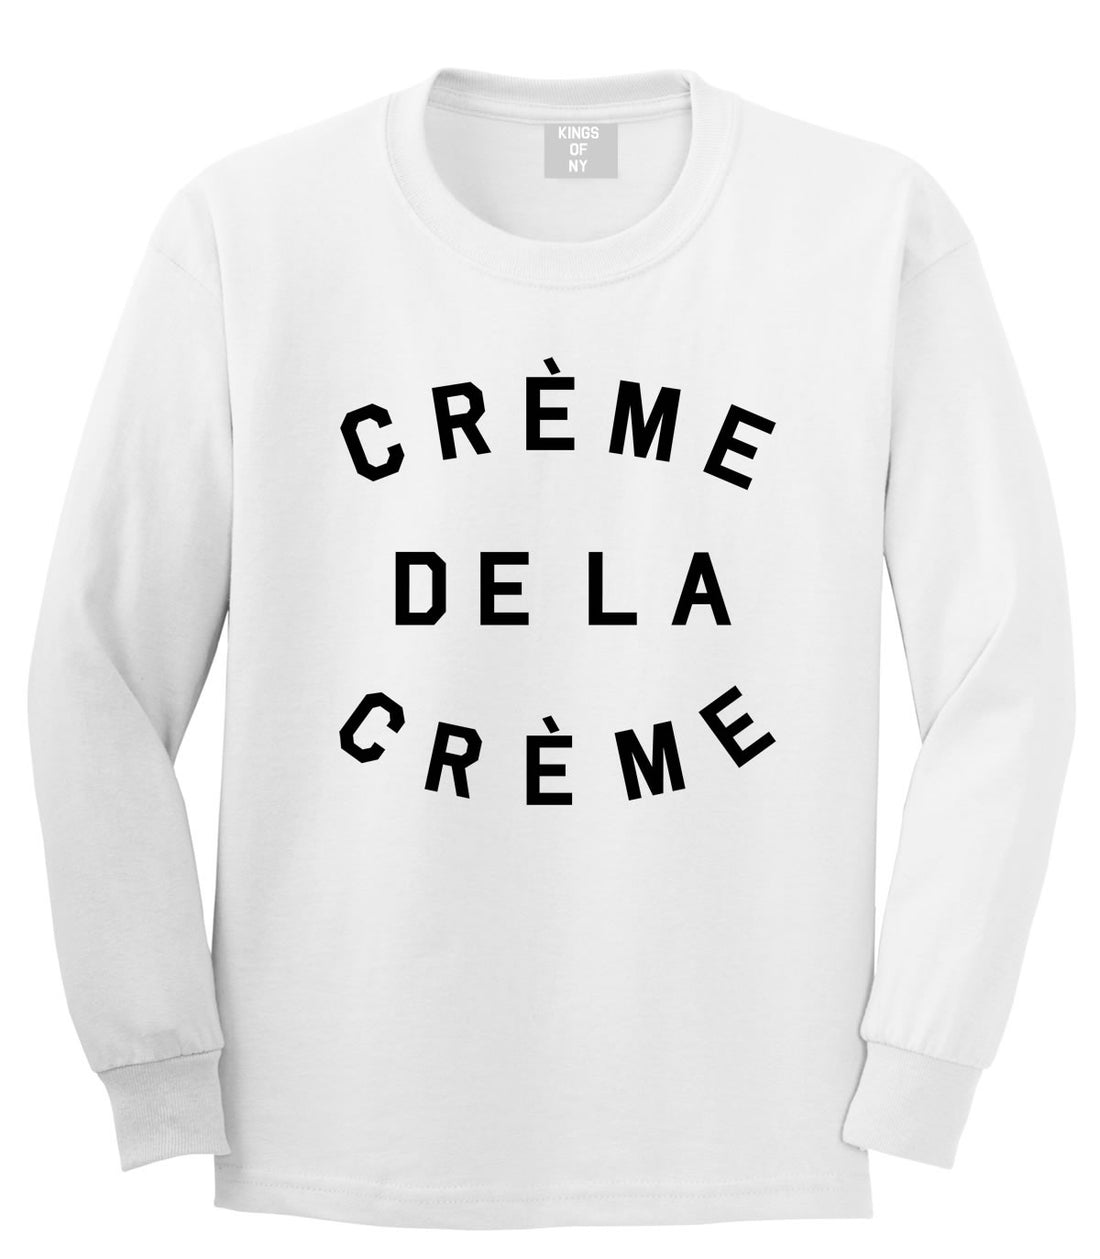 Creme De La Creme Celebrity Fashion Crop Long Sleeve Boys Kids T-Shirt in White by Kings Of NY